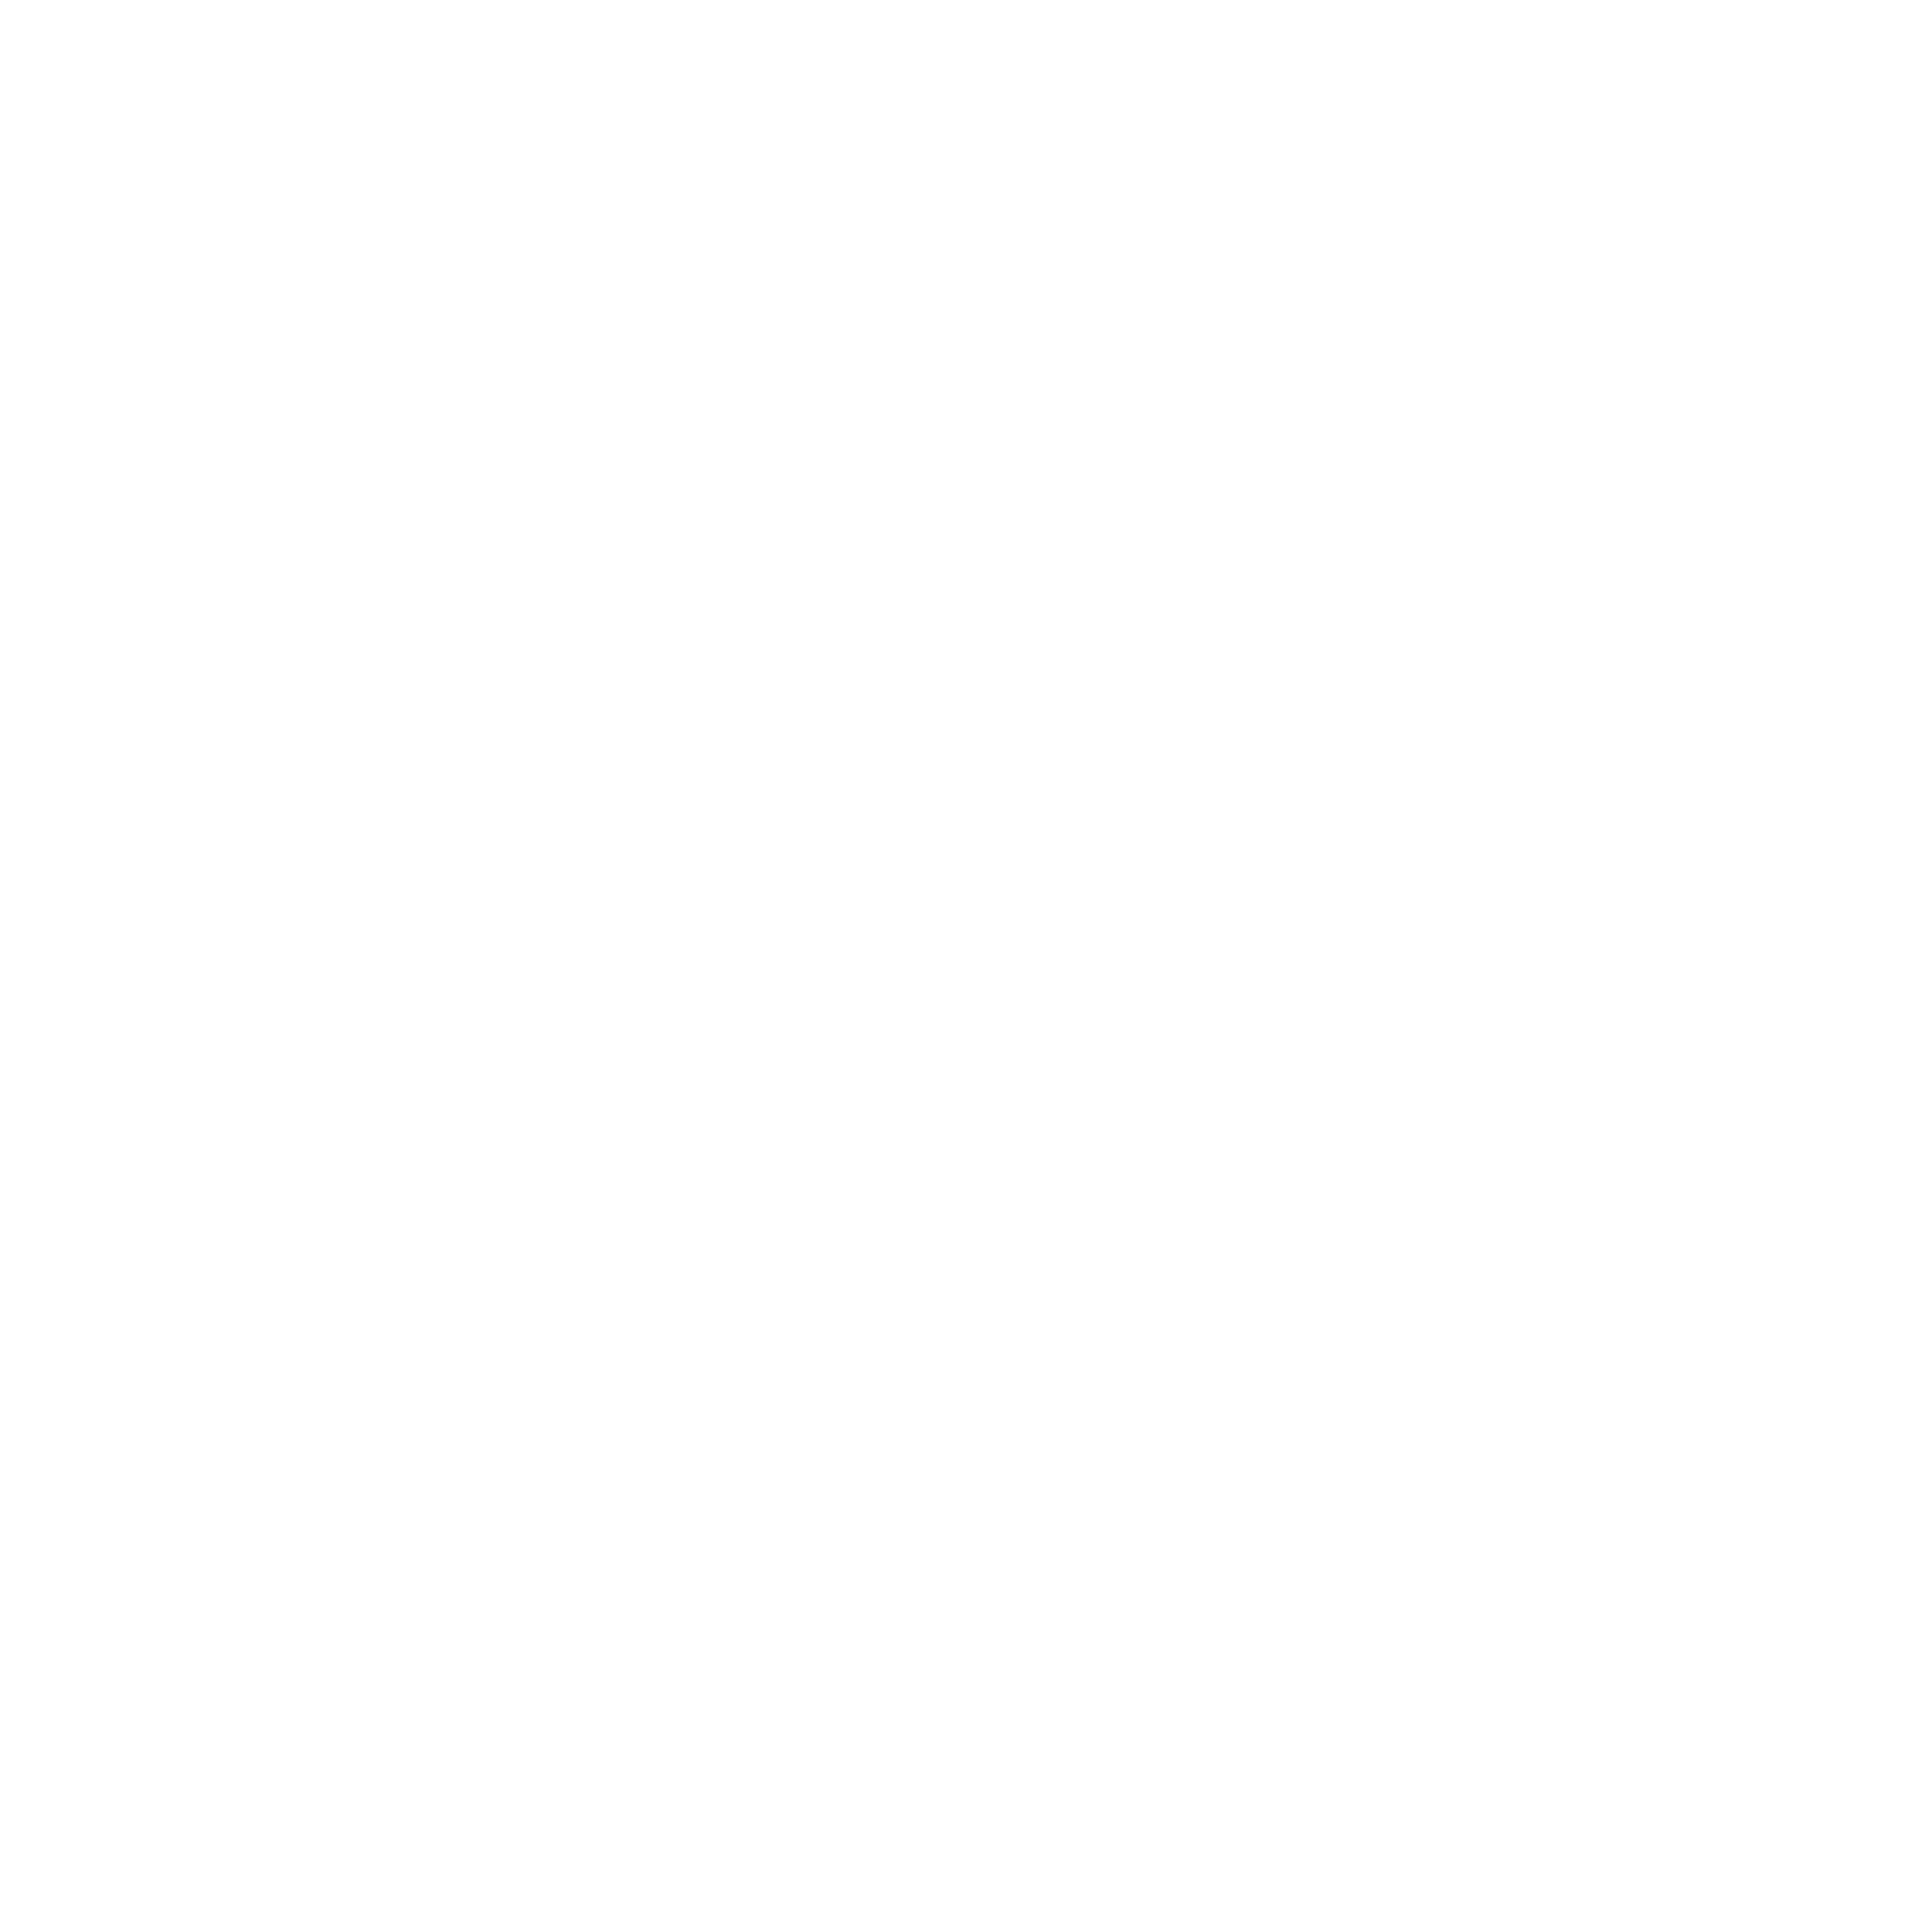 Persil Logo - Persil Logo PNG Transparent & SVG Vector - Freebie Supply